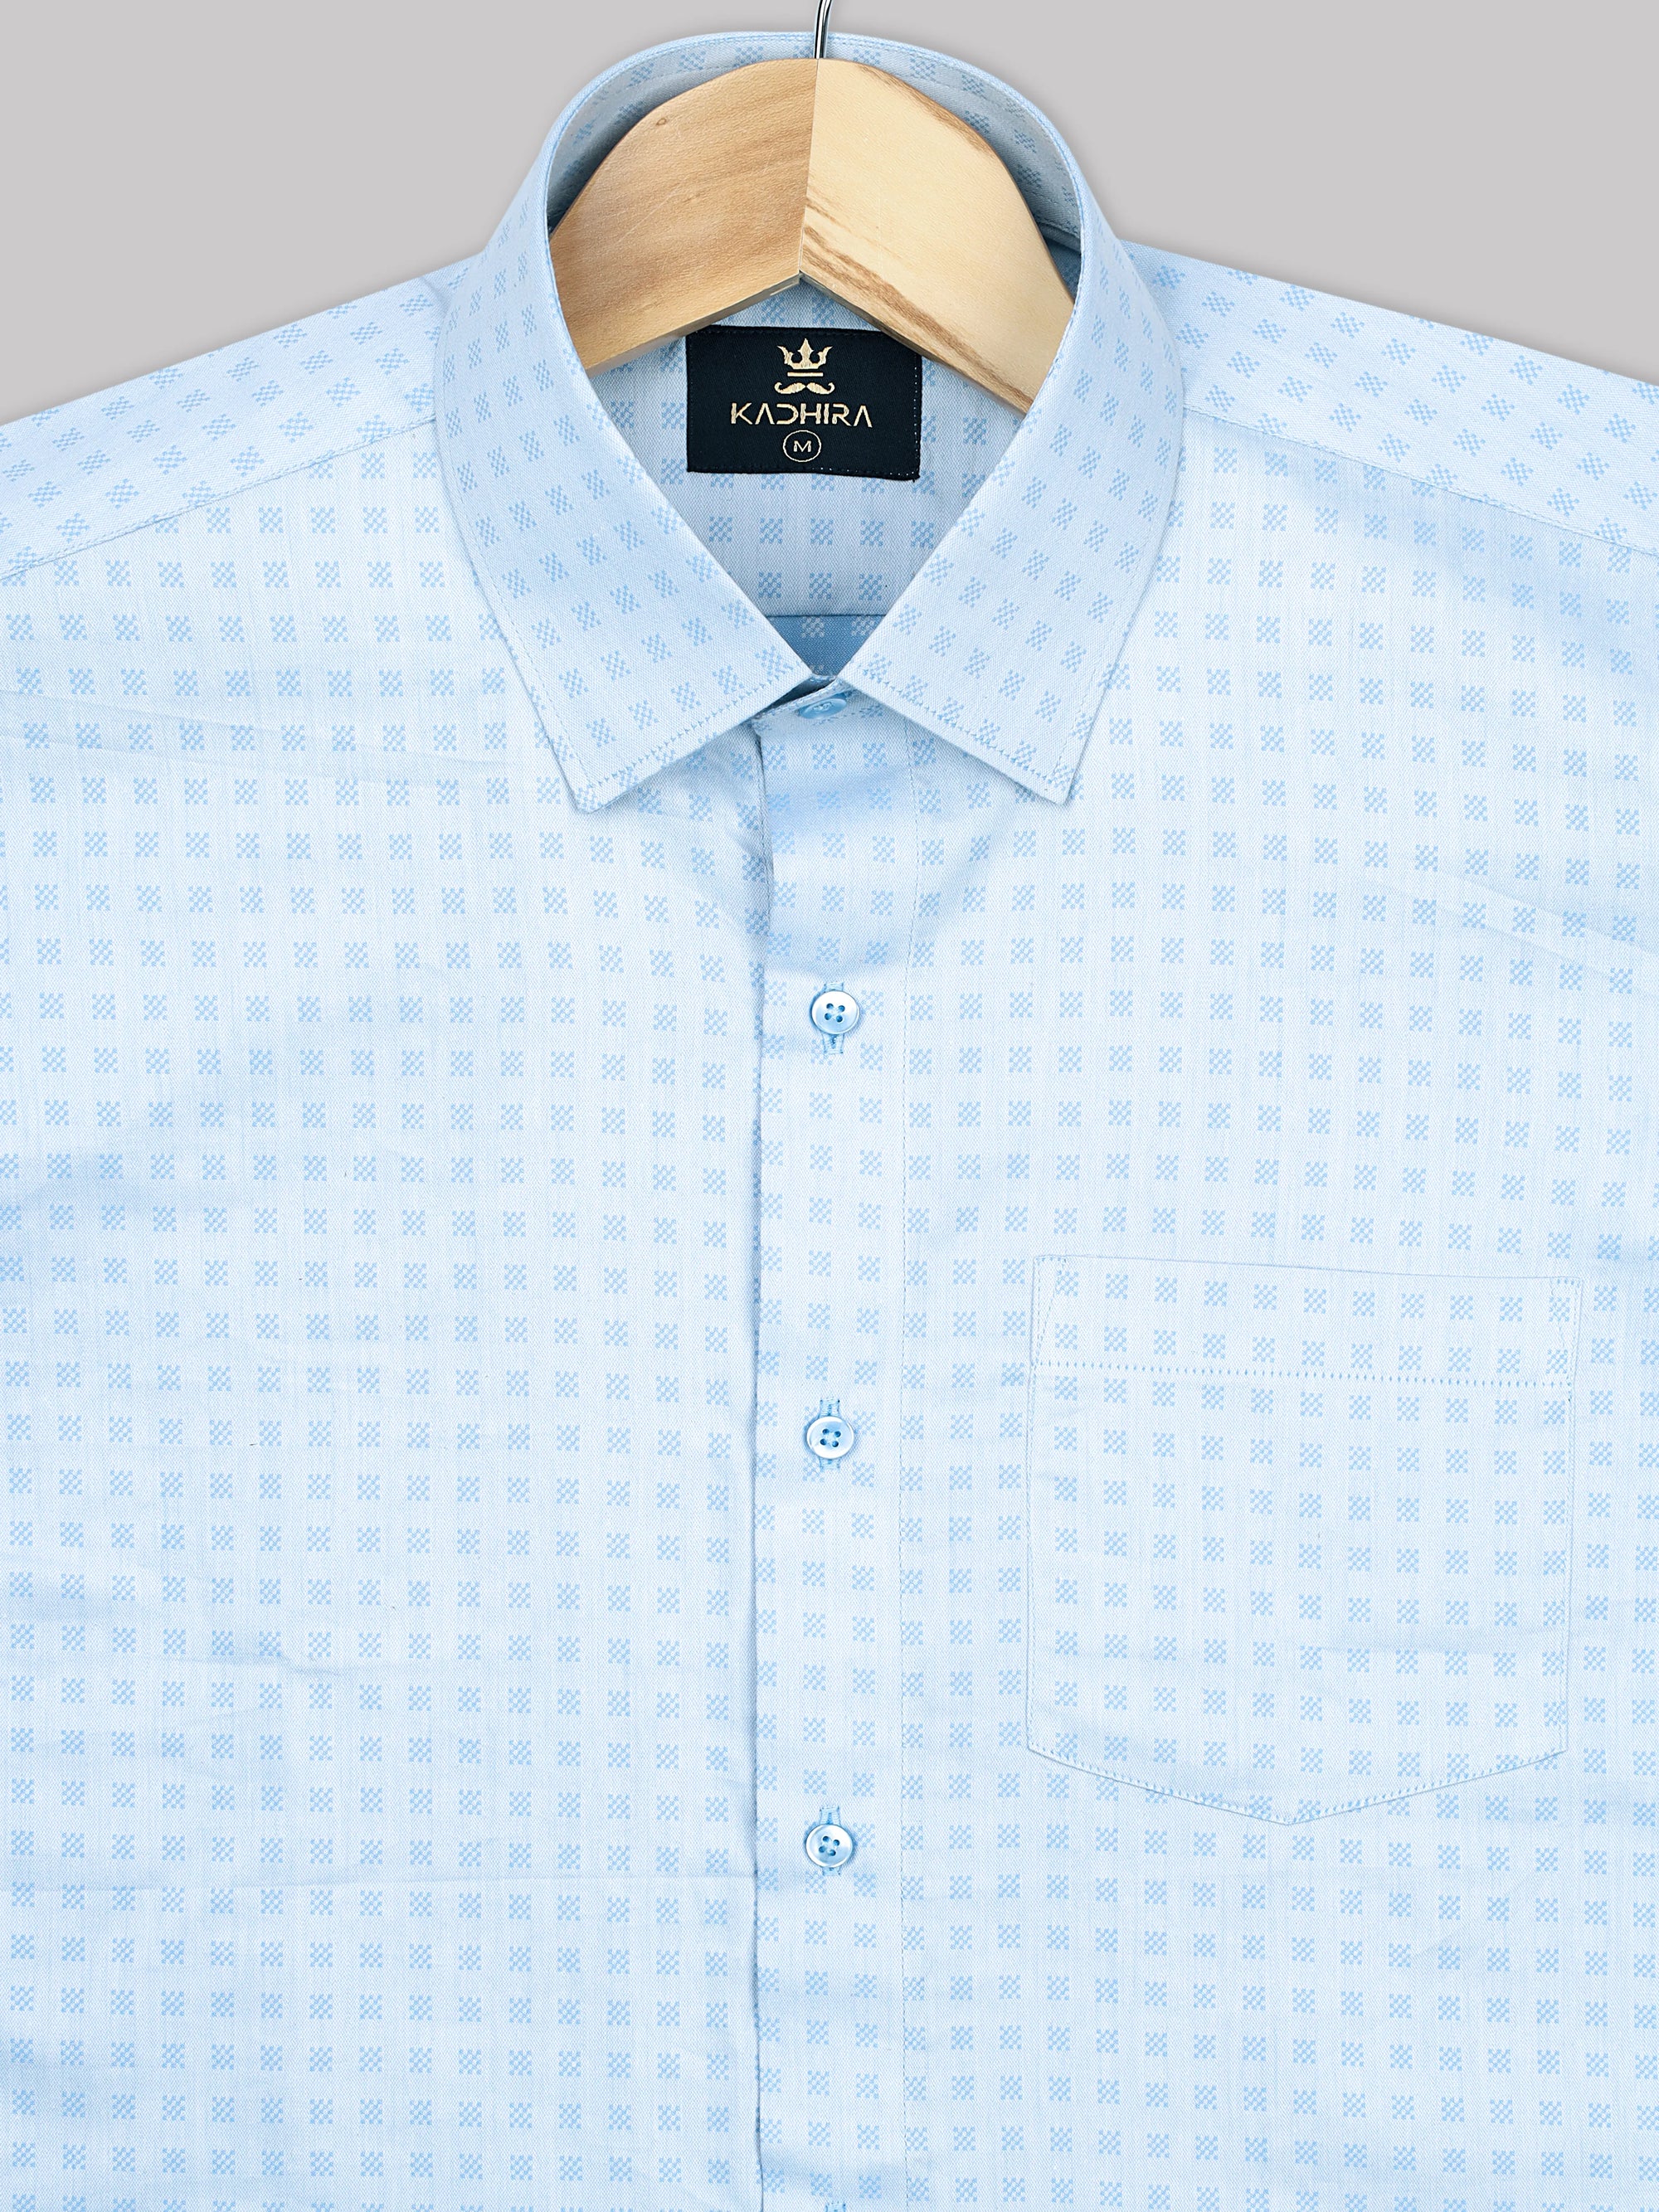 Columbia Blue  Shephered Dobby Textured Jacquard Cotton Shirt